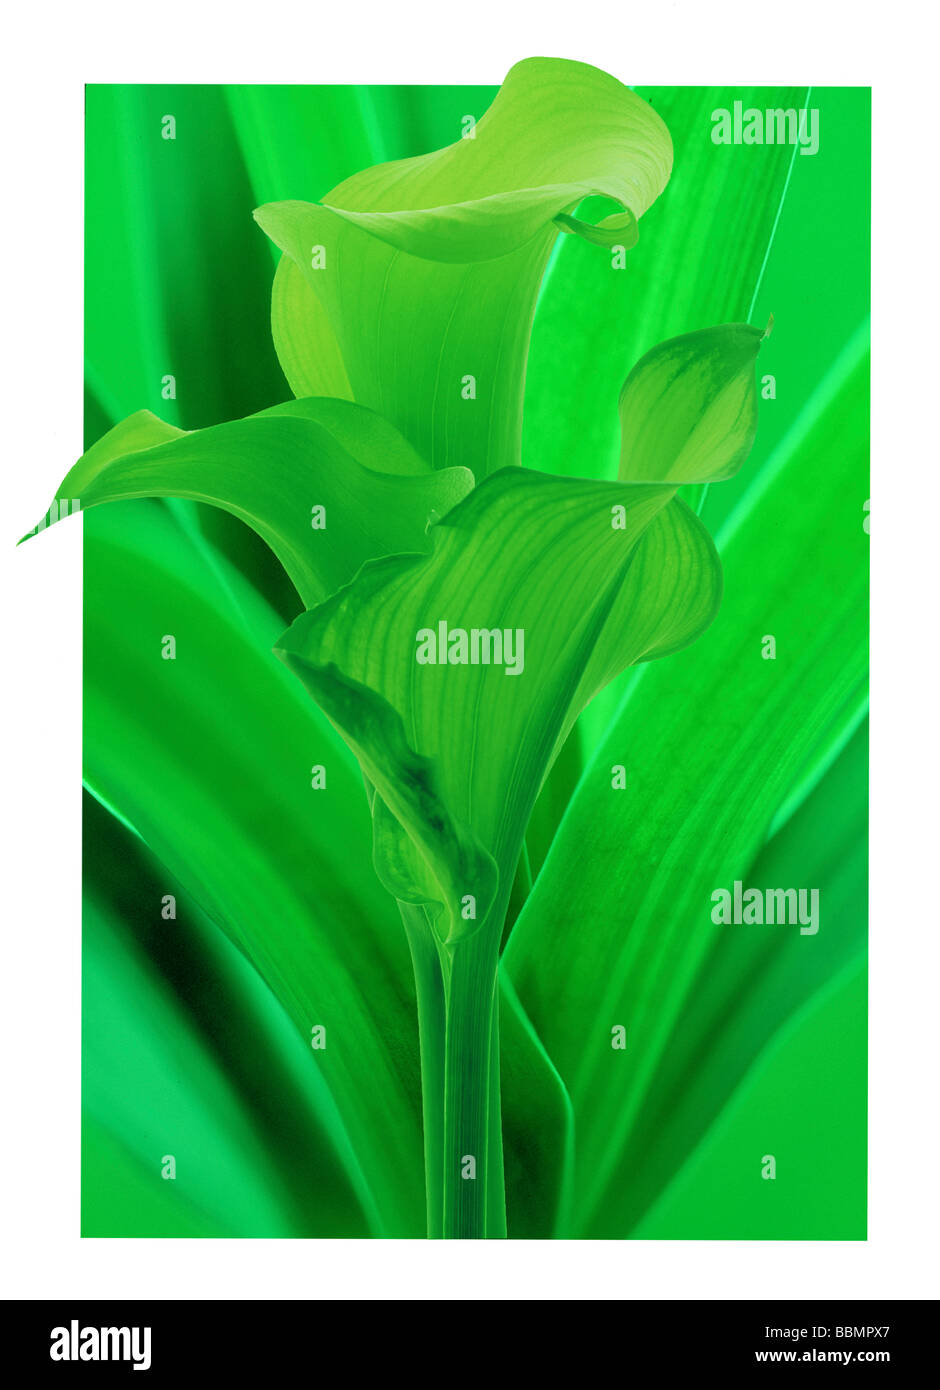 View of green pendulous flowers Stock Photo